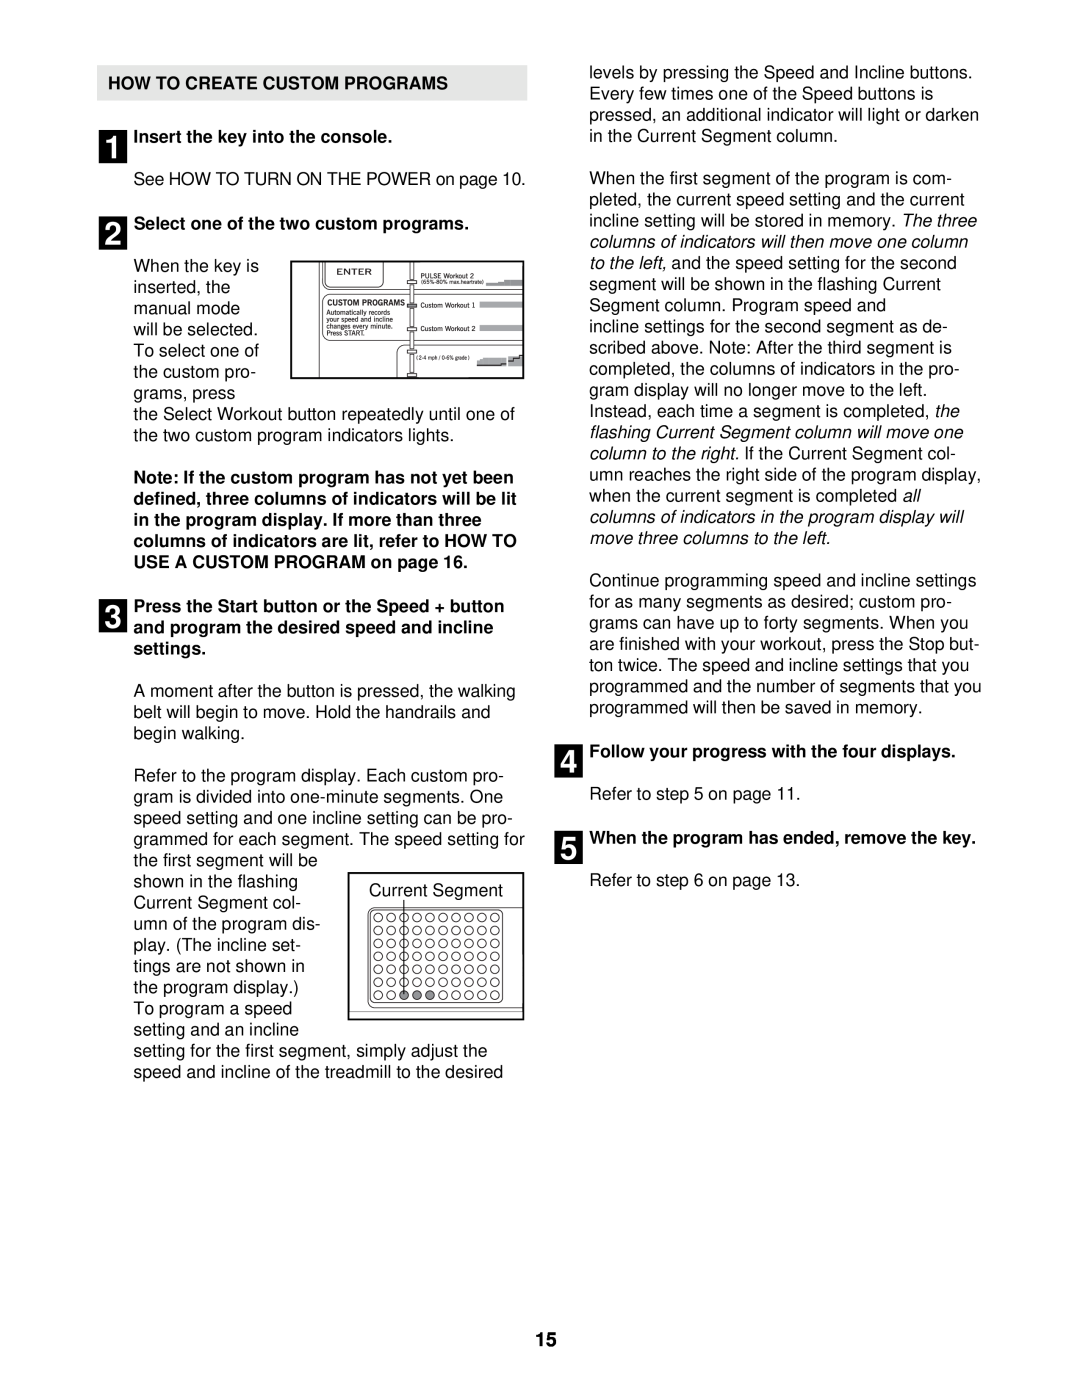 Reebok Fitness RBTL14910 manual HOW TO CREATE CUSTOM PROGRAMS 1 Insert the key into the console 